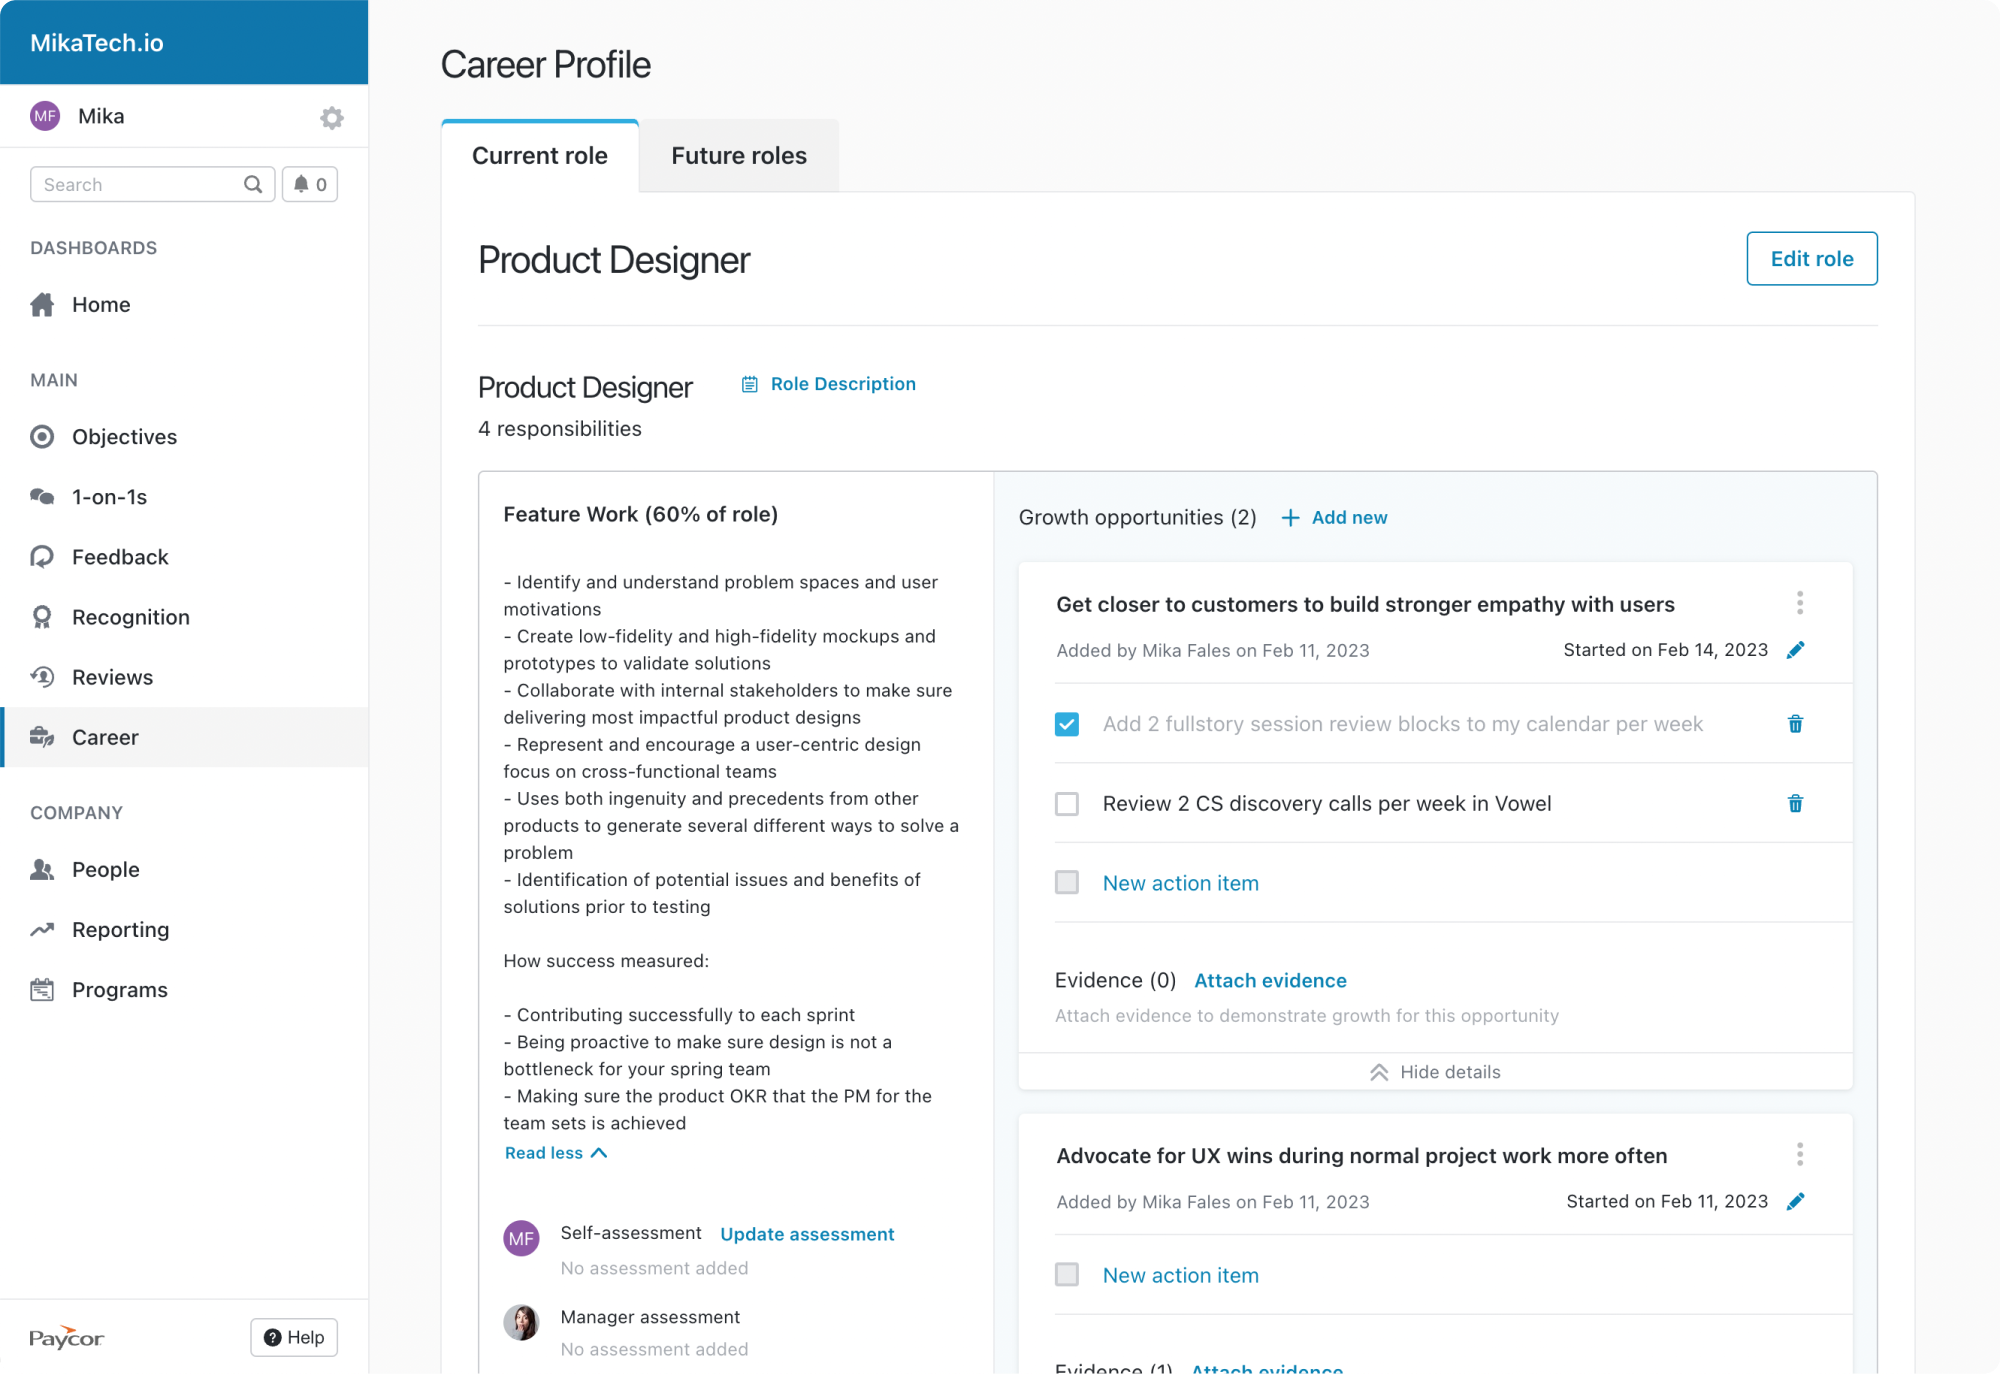 A user's Career Profile